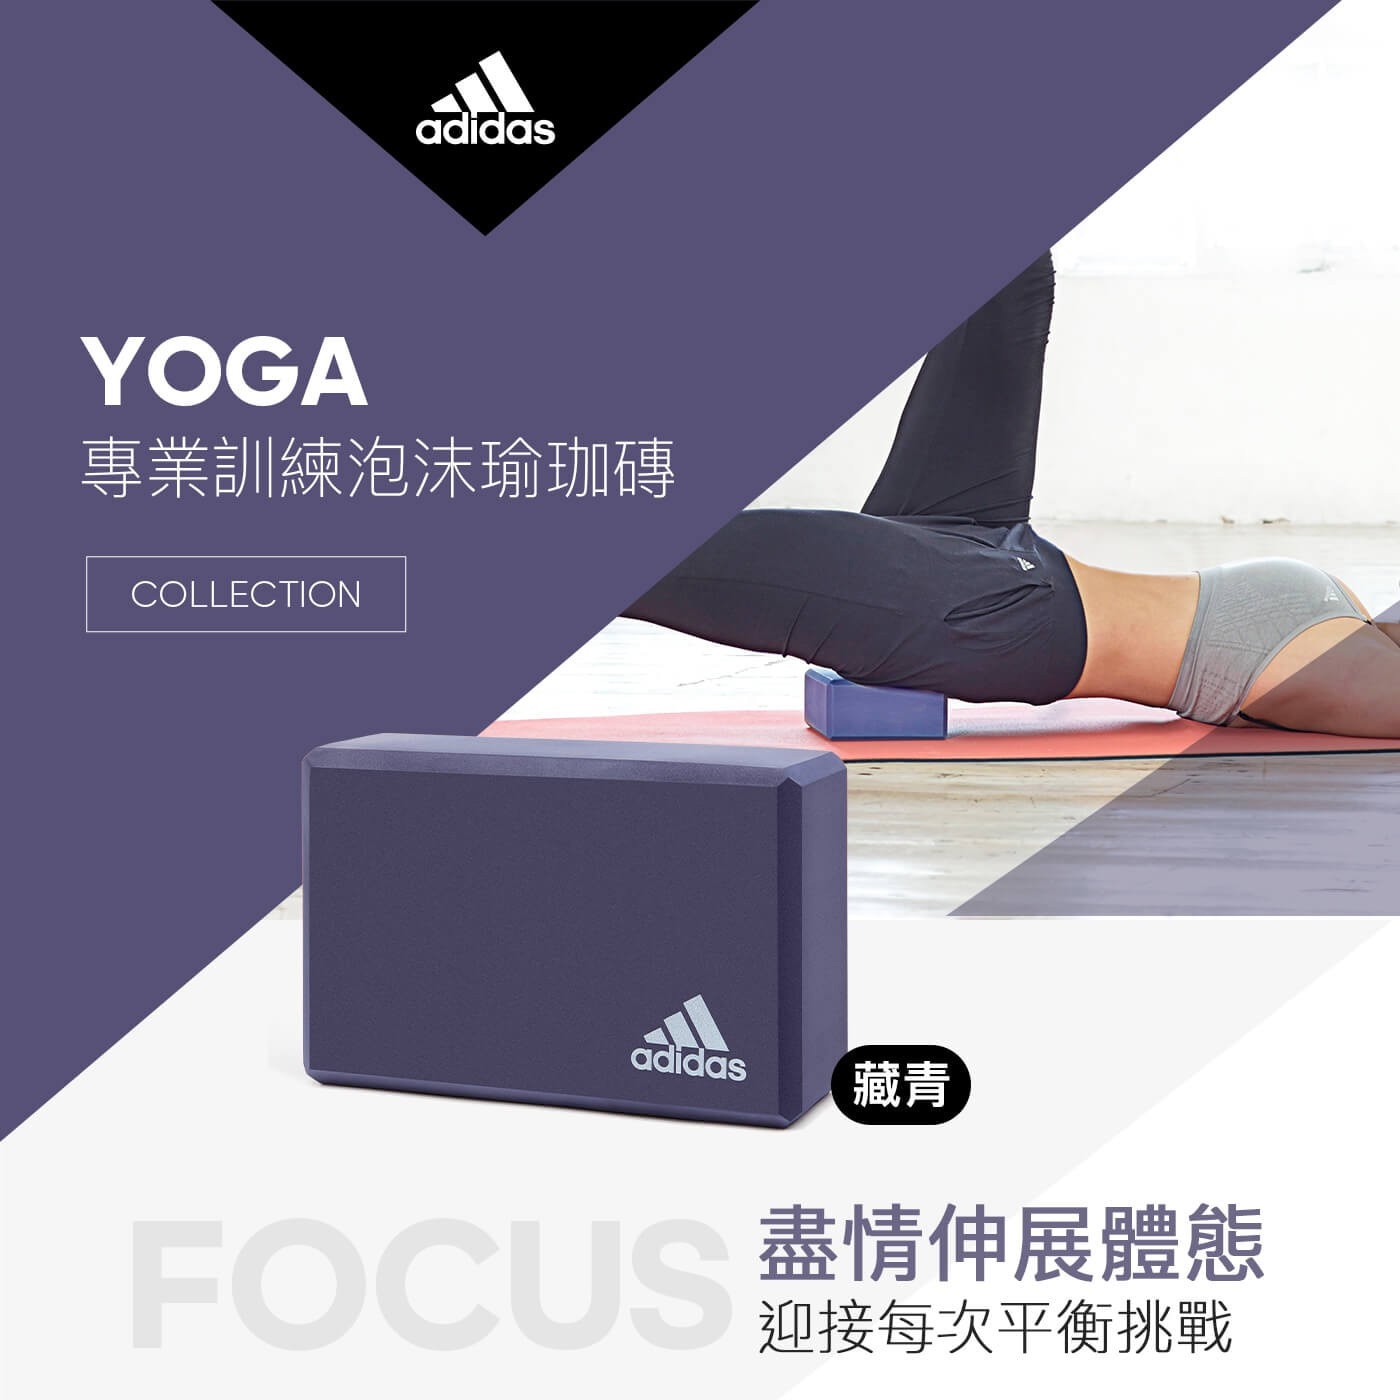 Adidas 專業訓練泡沫瑜珈磚 2入盡情伸展體態迎接每次平衡挑戰